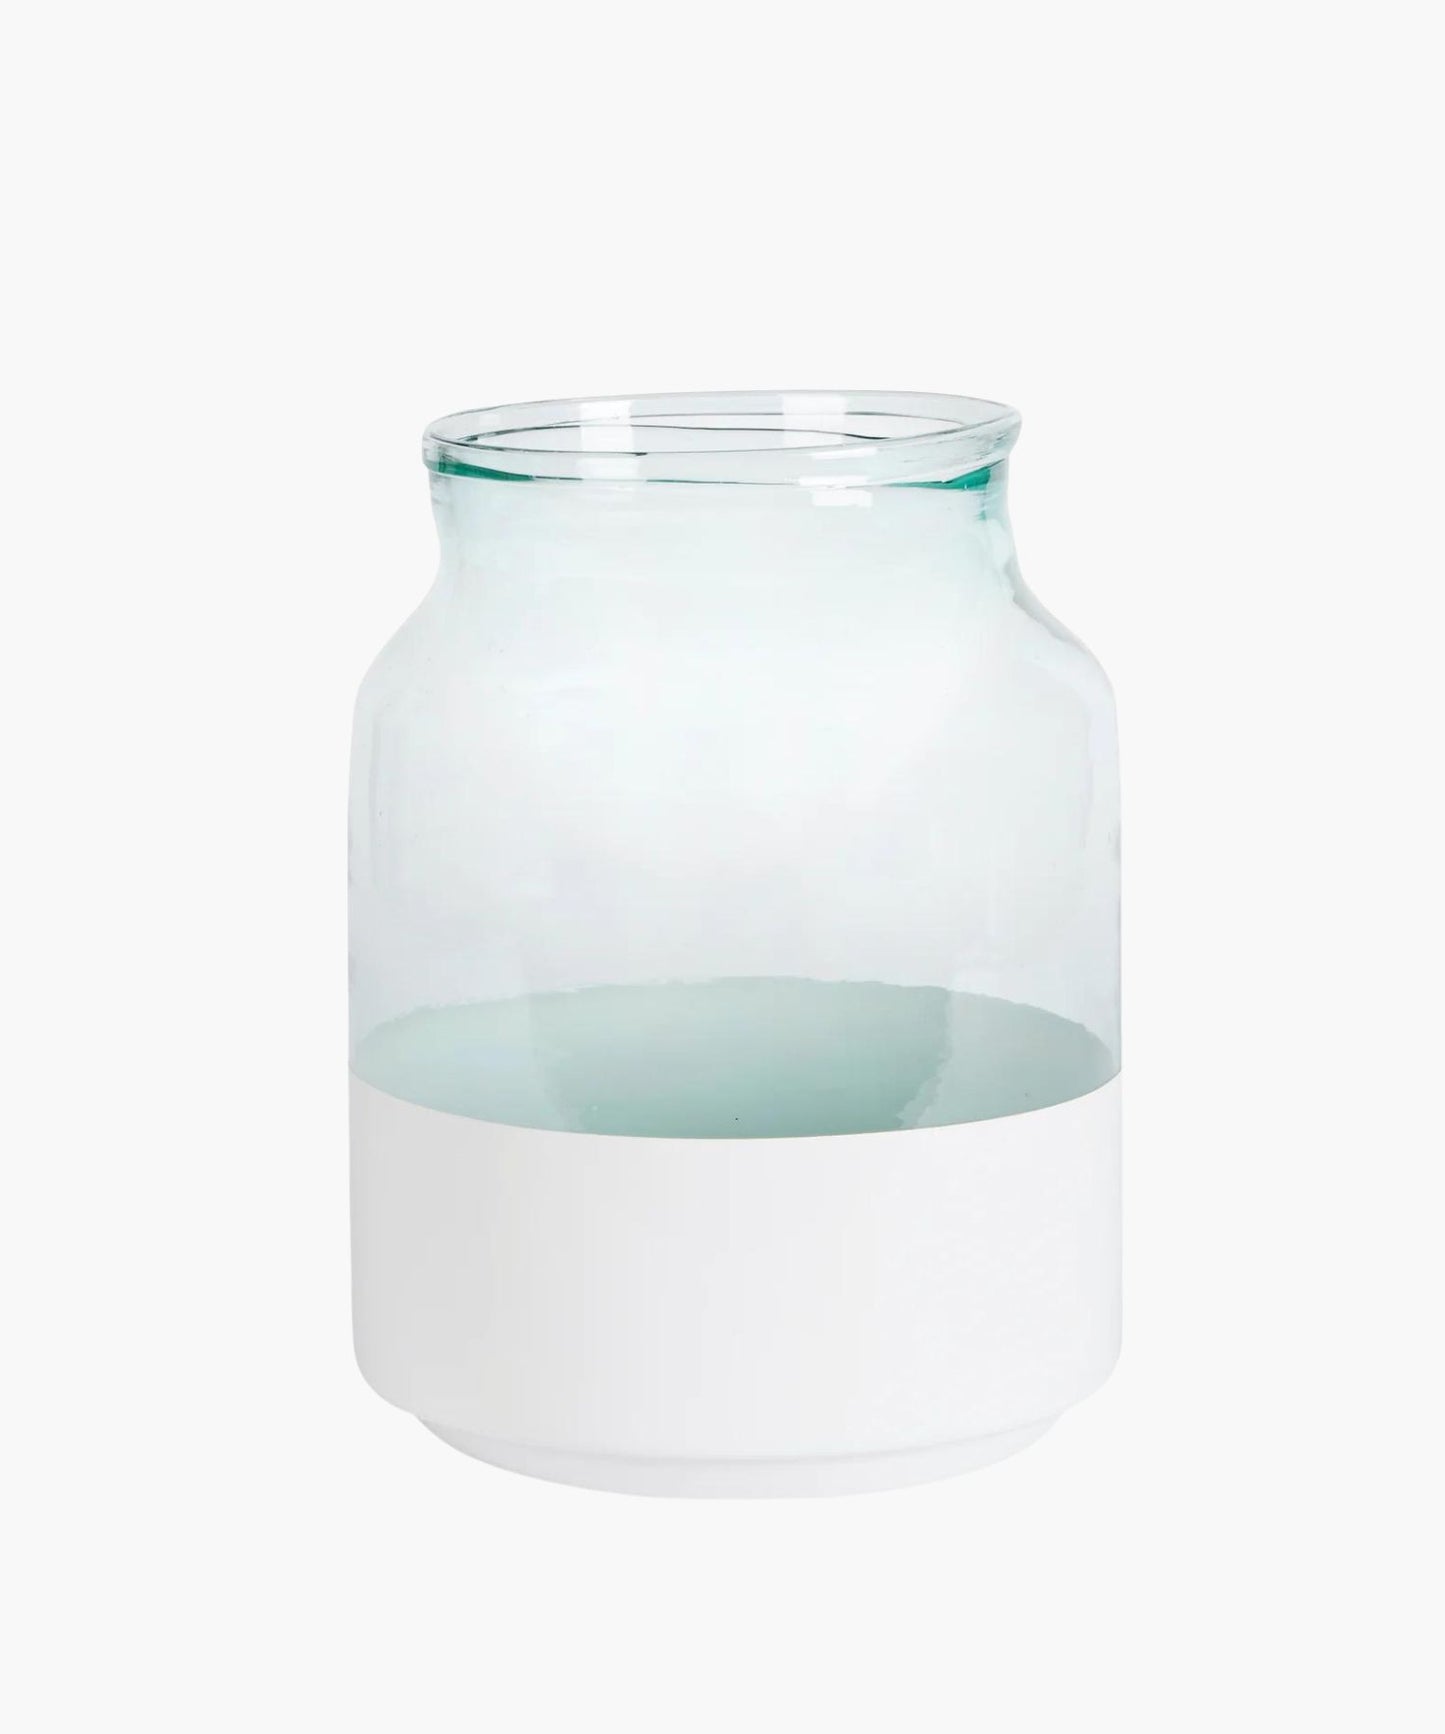 White Colorblock Vase, 3 sizes